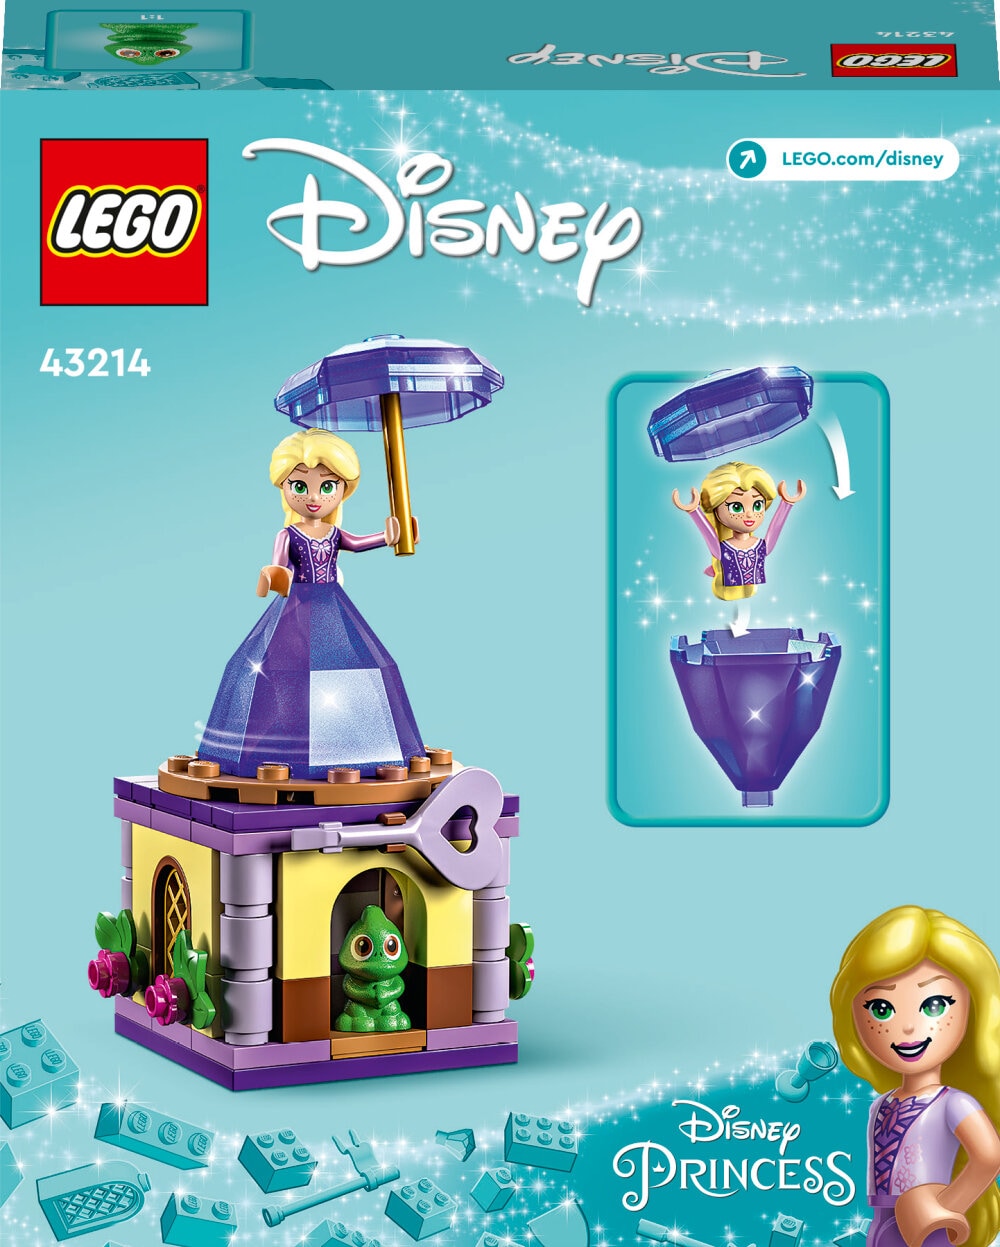 LEGO Disney - Draaiende Rapunzel 5+